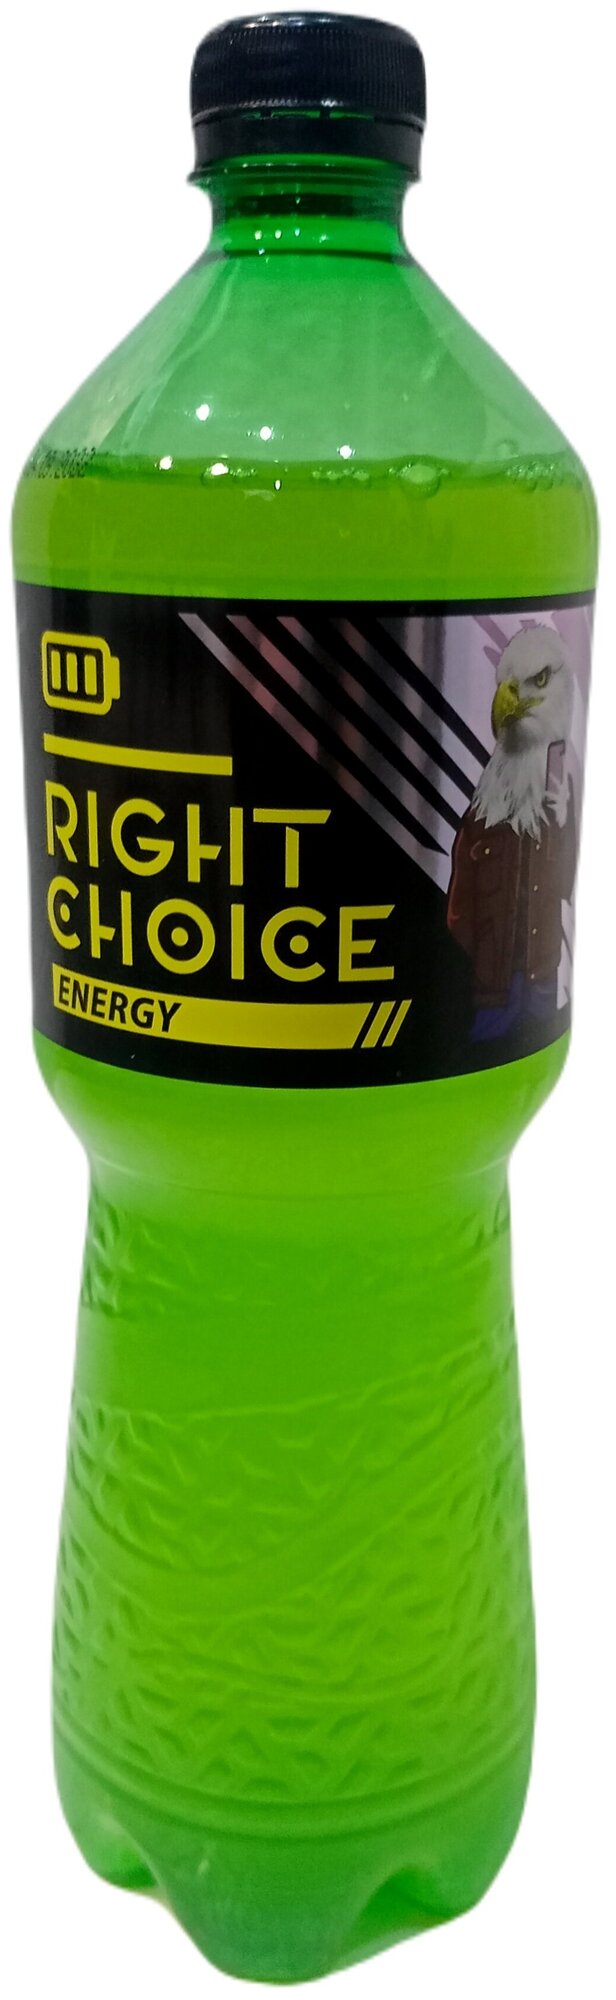 Энергетический напиток RIGHT CHOICE, 1 л / Энергетик - фотография № 1